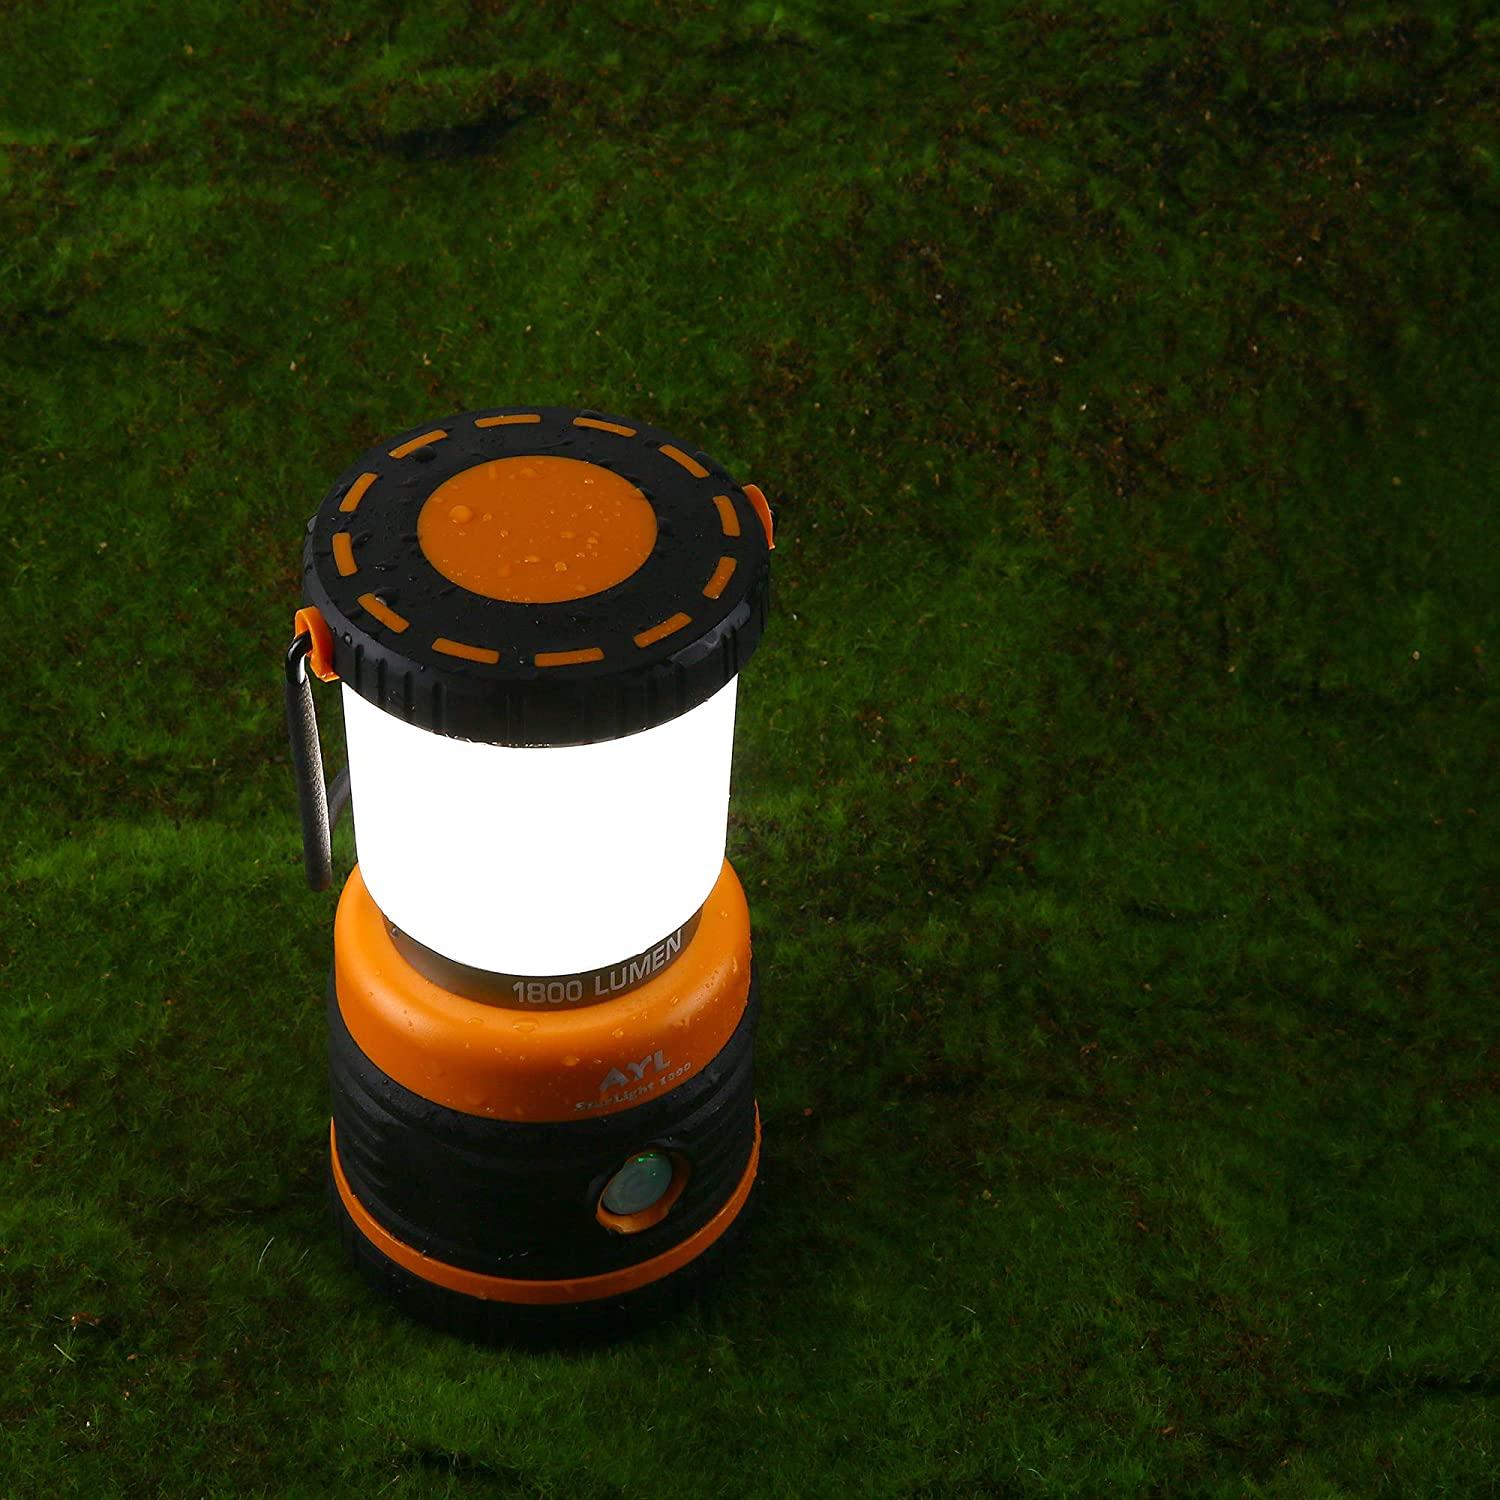 Portable Lights - Lanterns, Flashlights & More